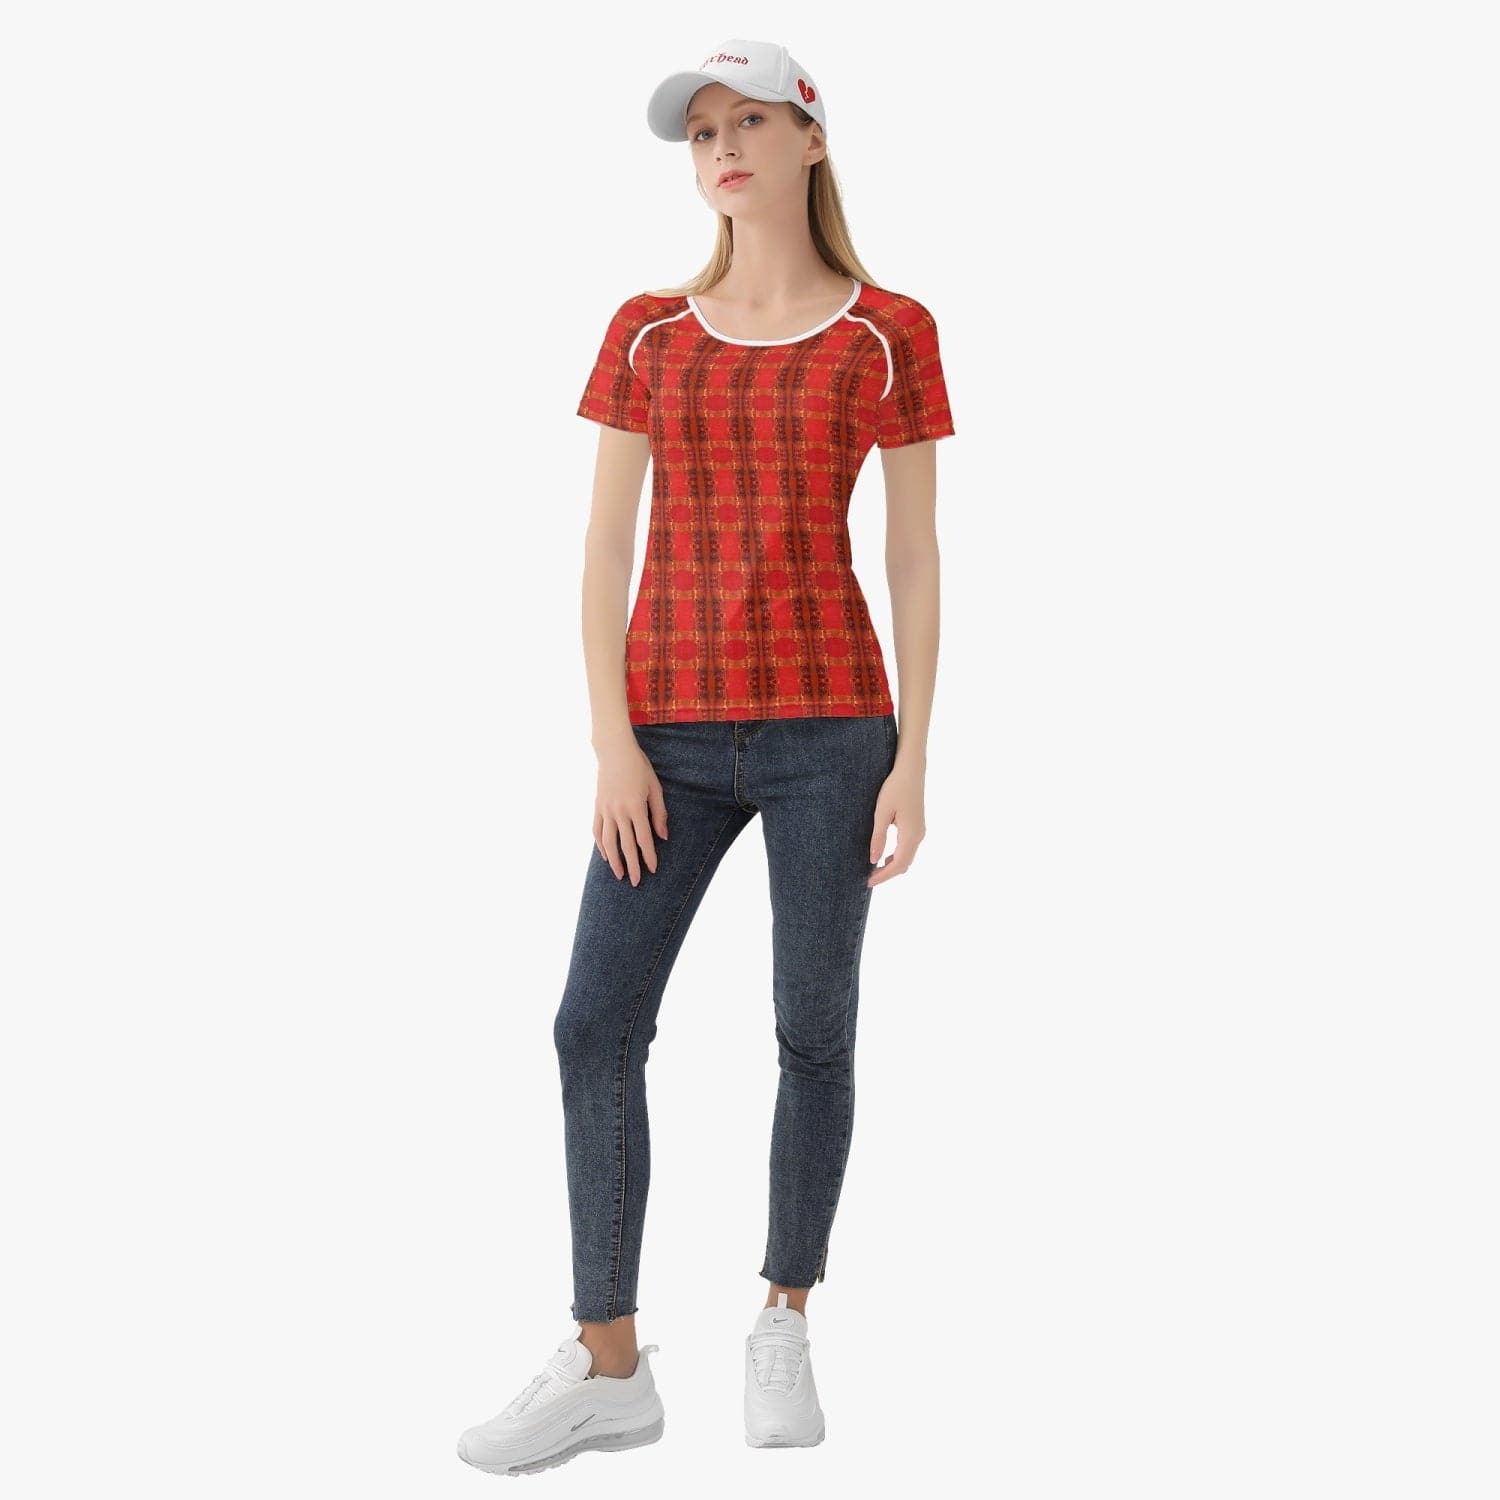 Active Red, Handmade Stylish Women T-shirt Sports/ Yoga Top, by Sensus Studio Design